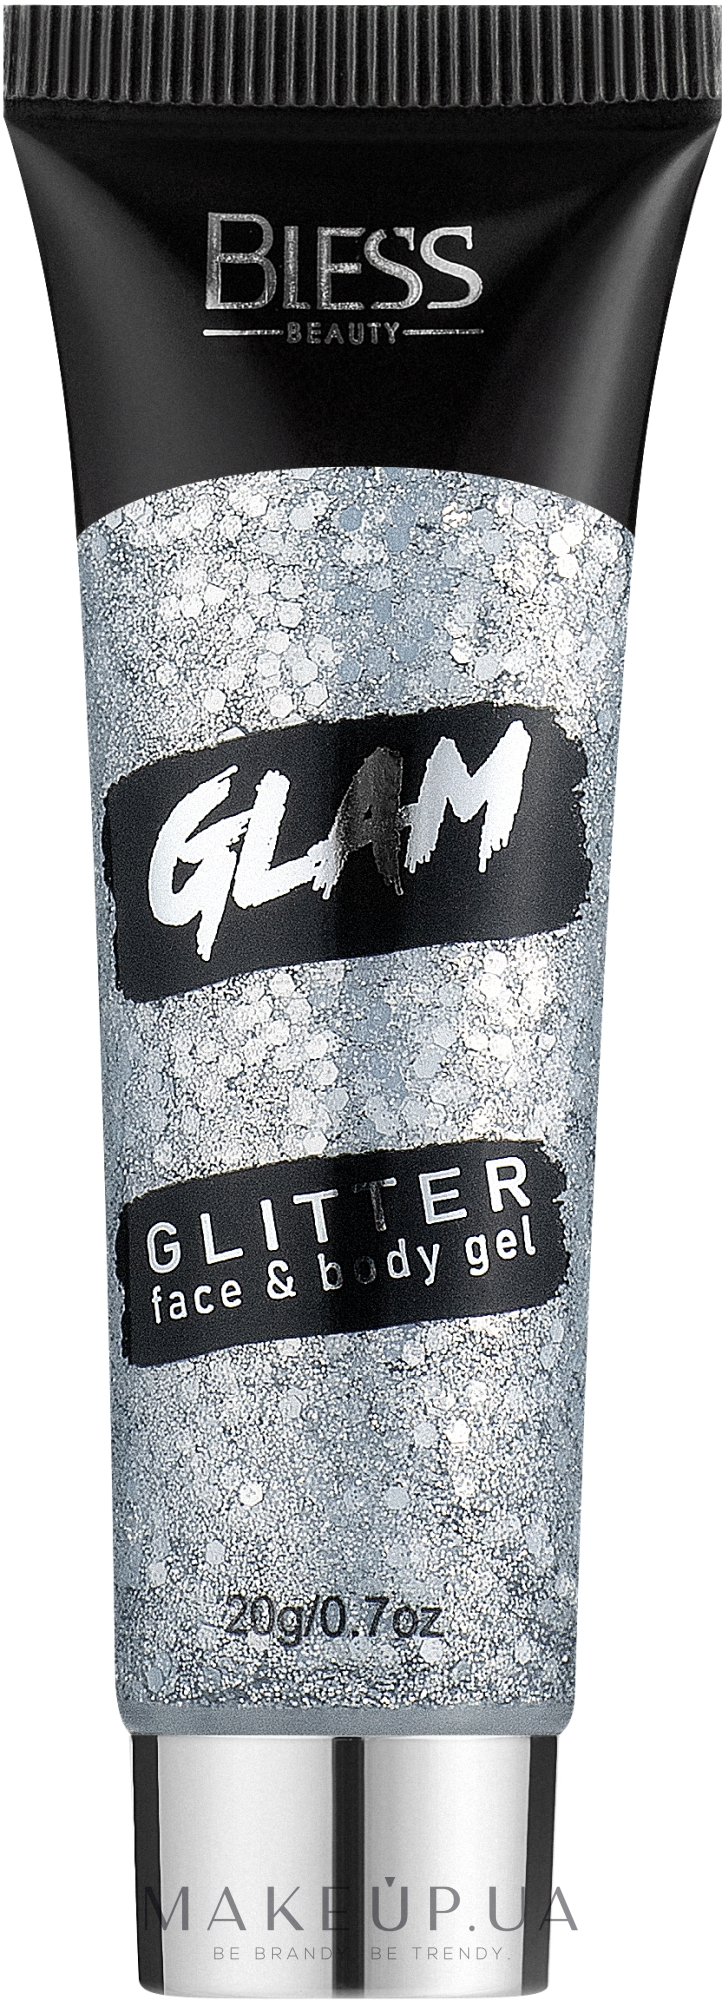 Глітер для обличчя й тіла - Bless Beauty Glam Glitter Face & Body Gel — фото 03